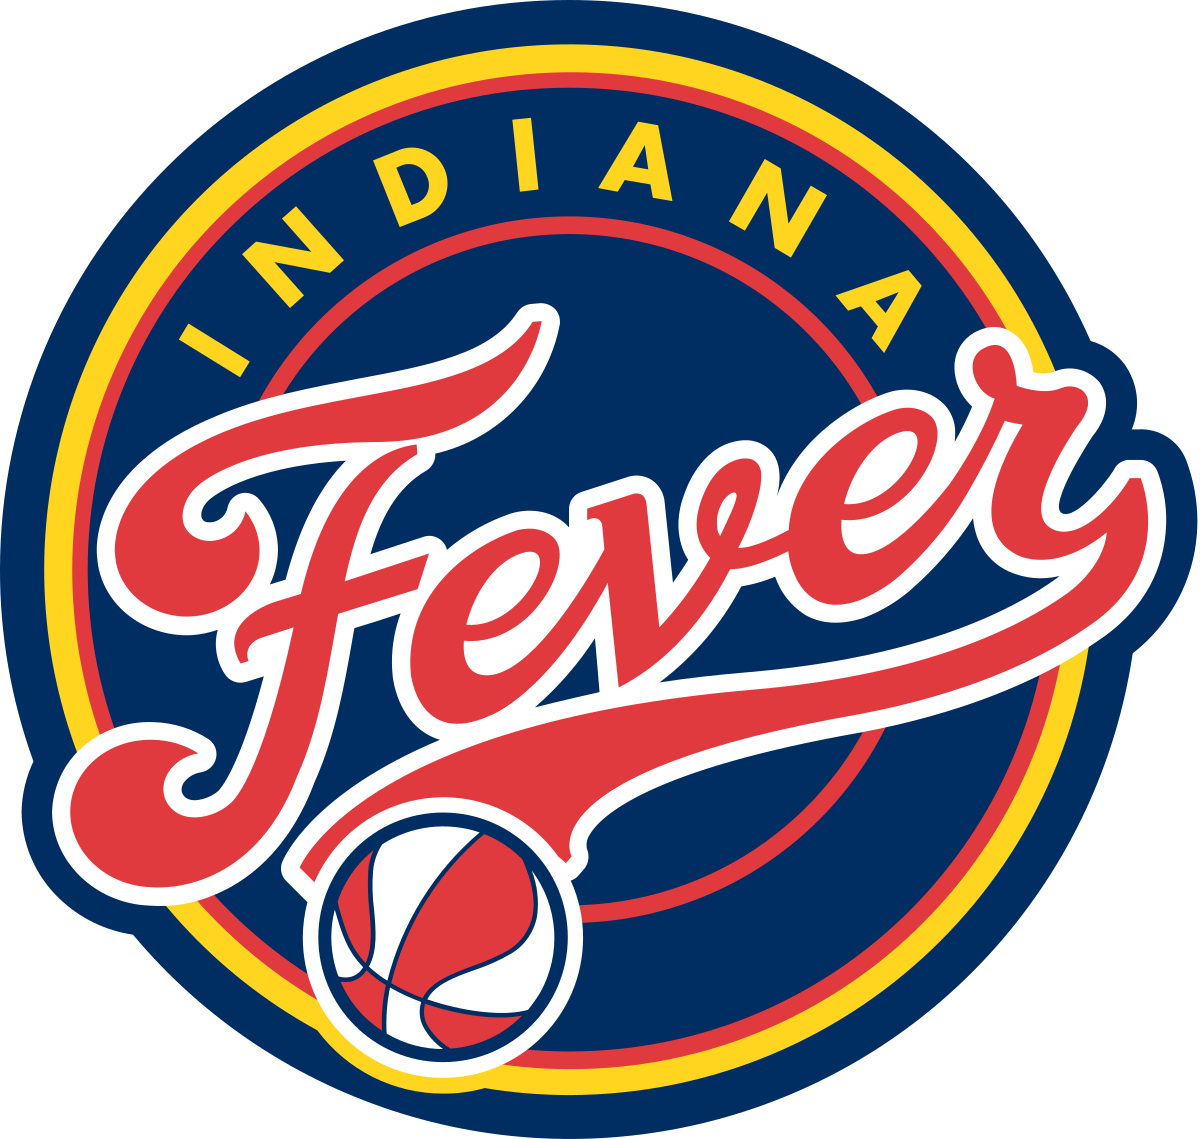 Indiana Fever Wikipedia Rh En Wikipedia Org Indiana - Indiana Fever Logo (1200x1139)